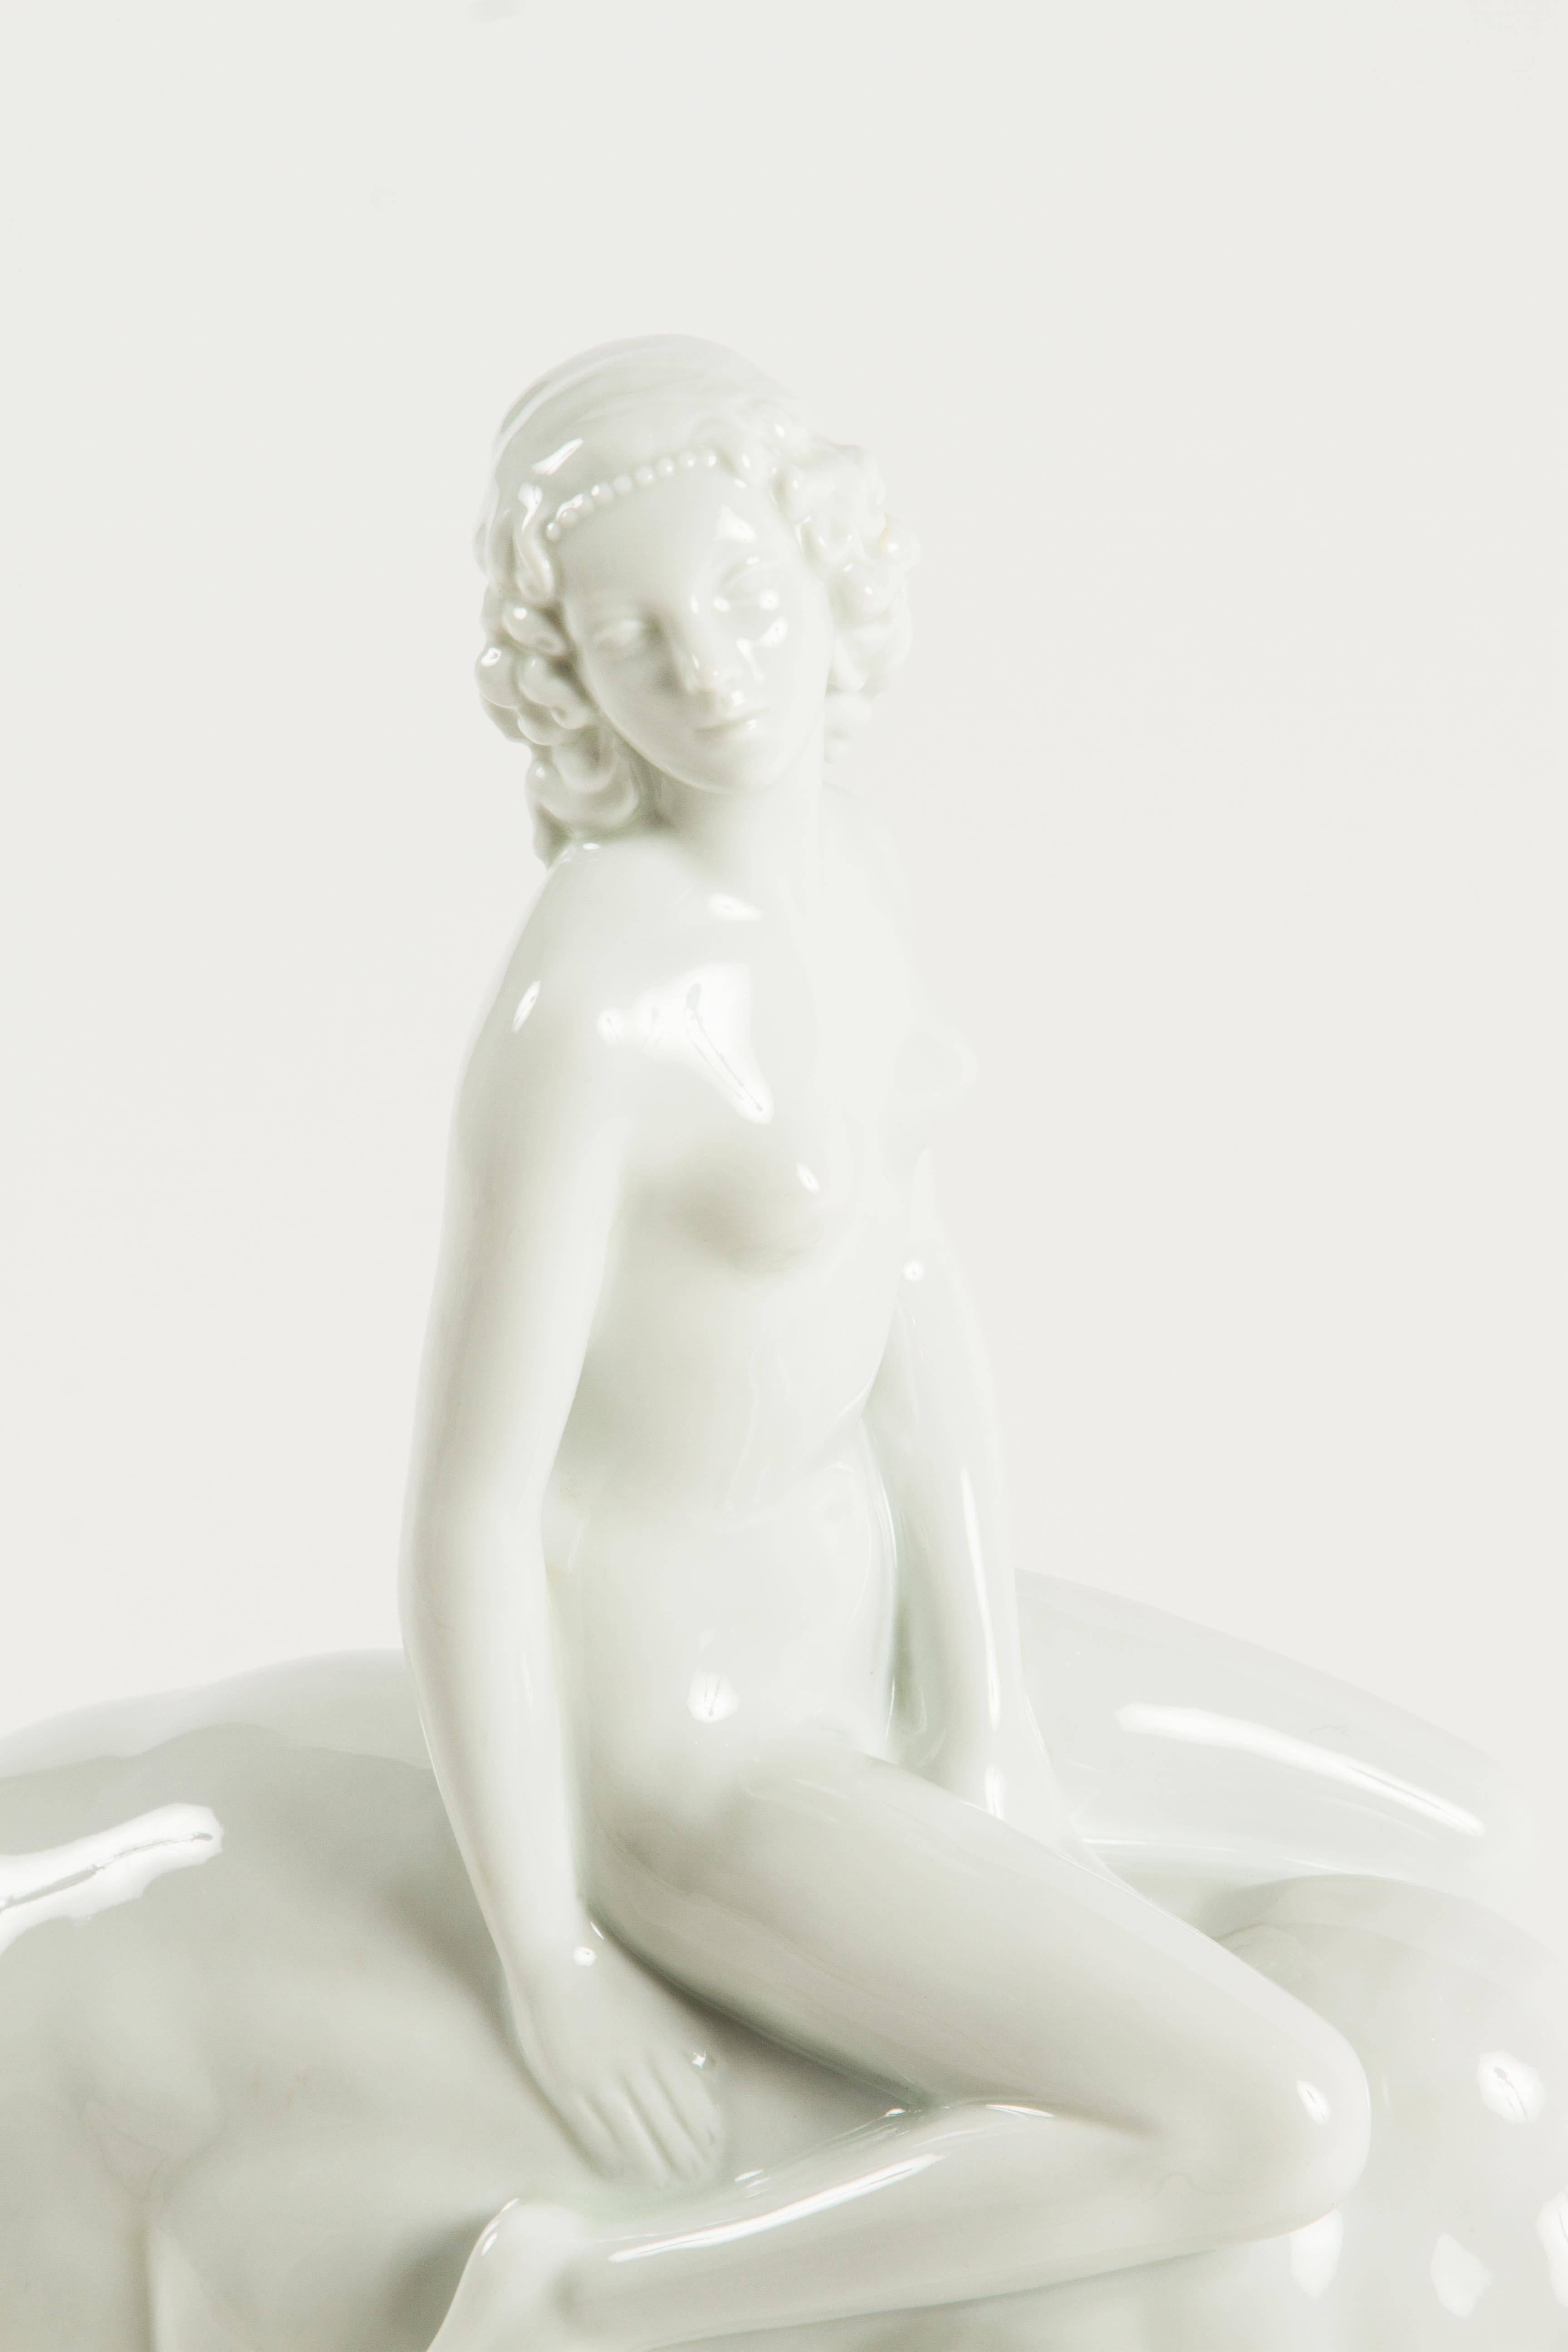 Glazed Heubach Blanc de Chine Figural Group by Max Hermann Fritz